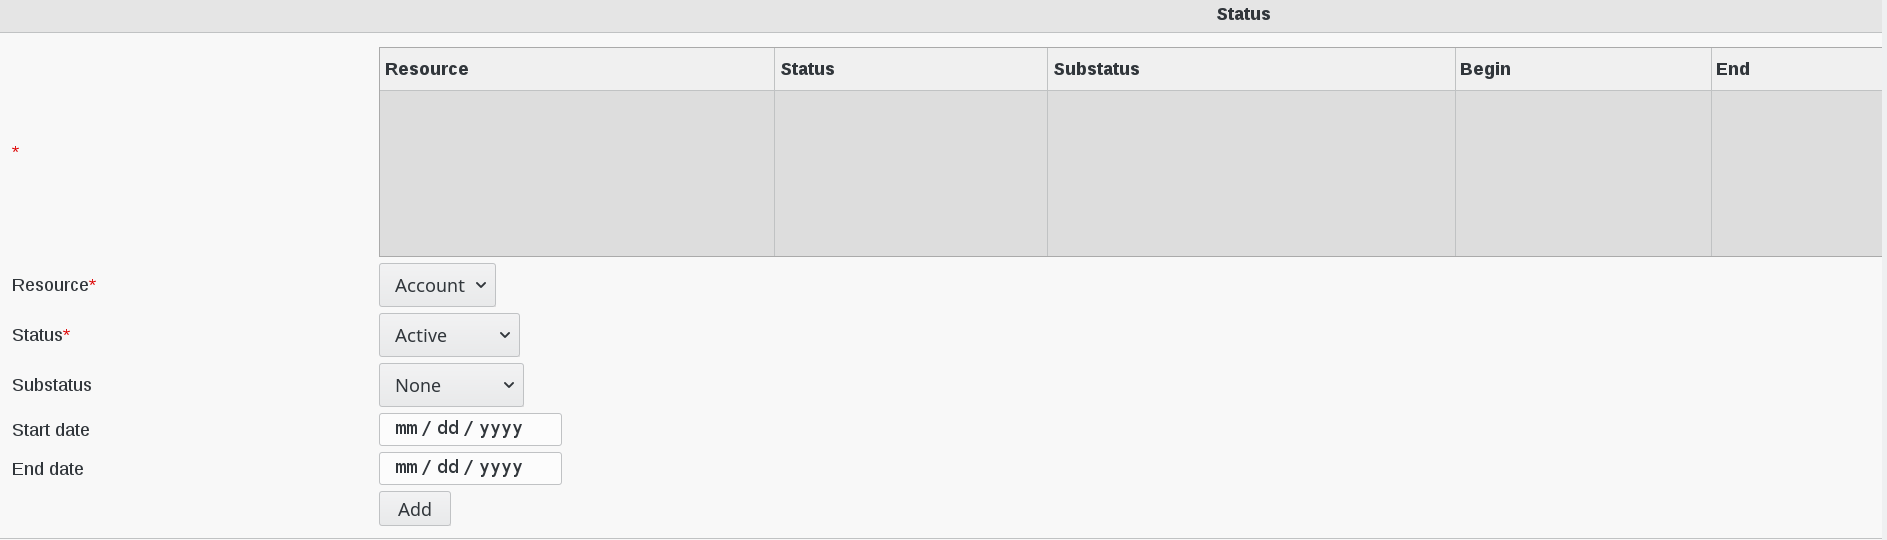 Picture of SupAnn status settings menu in FusionDirectory